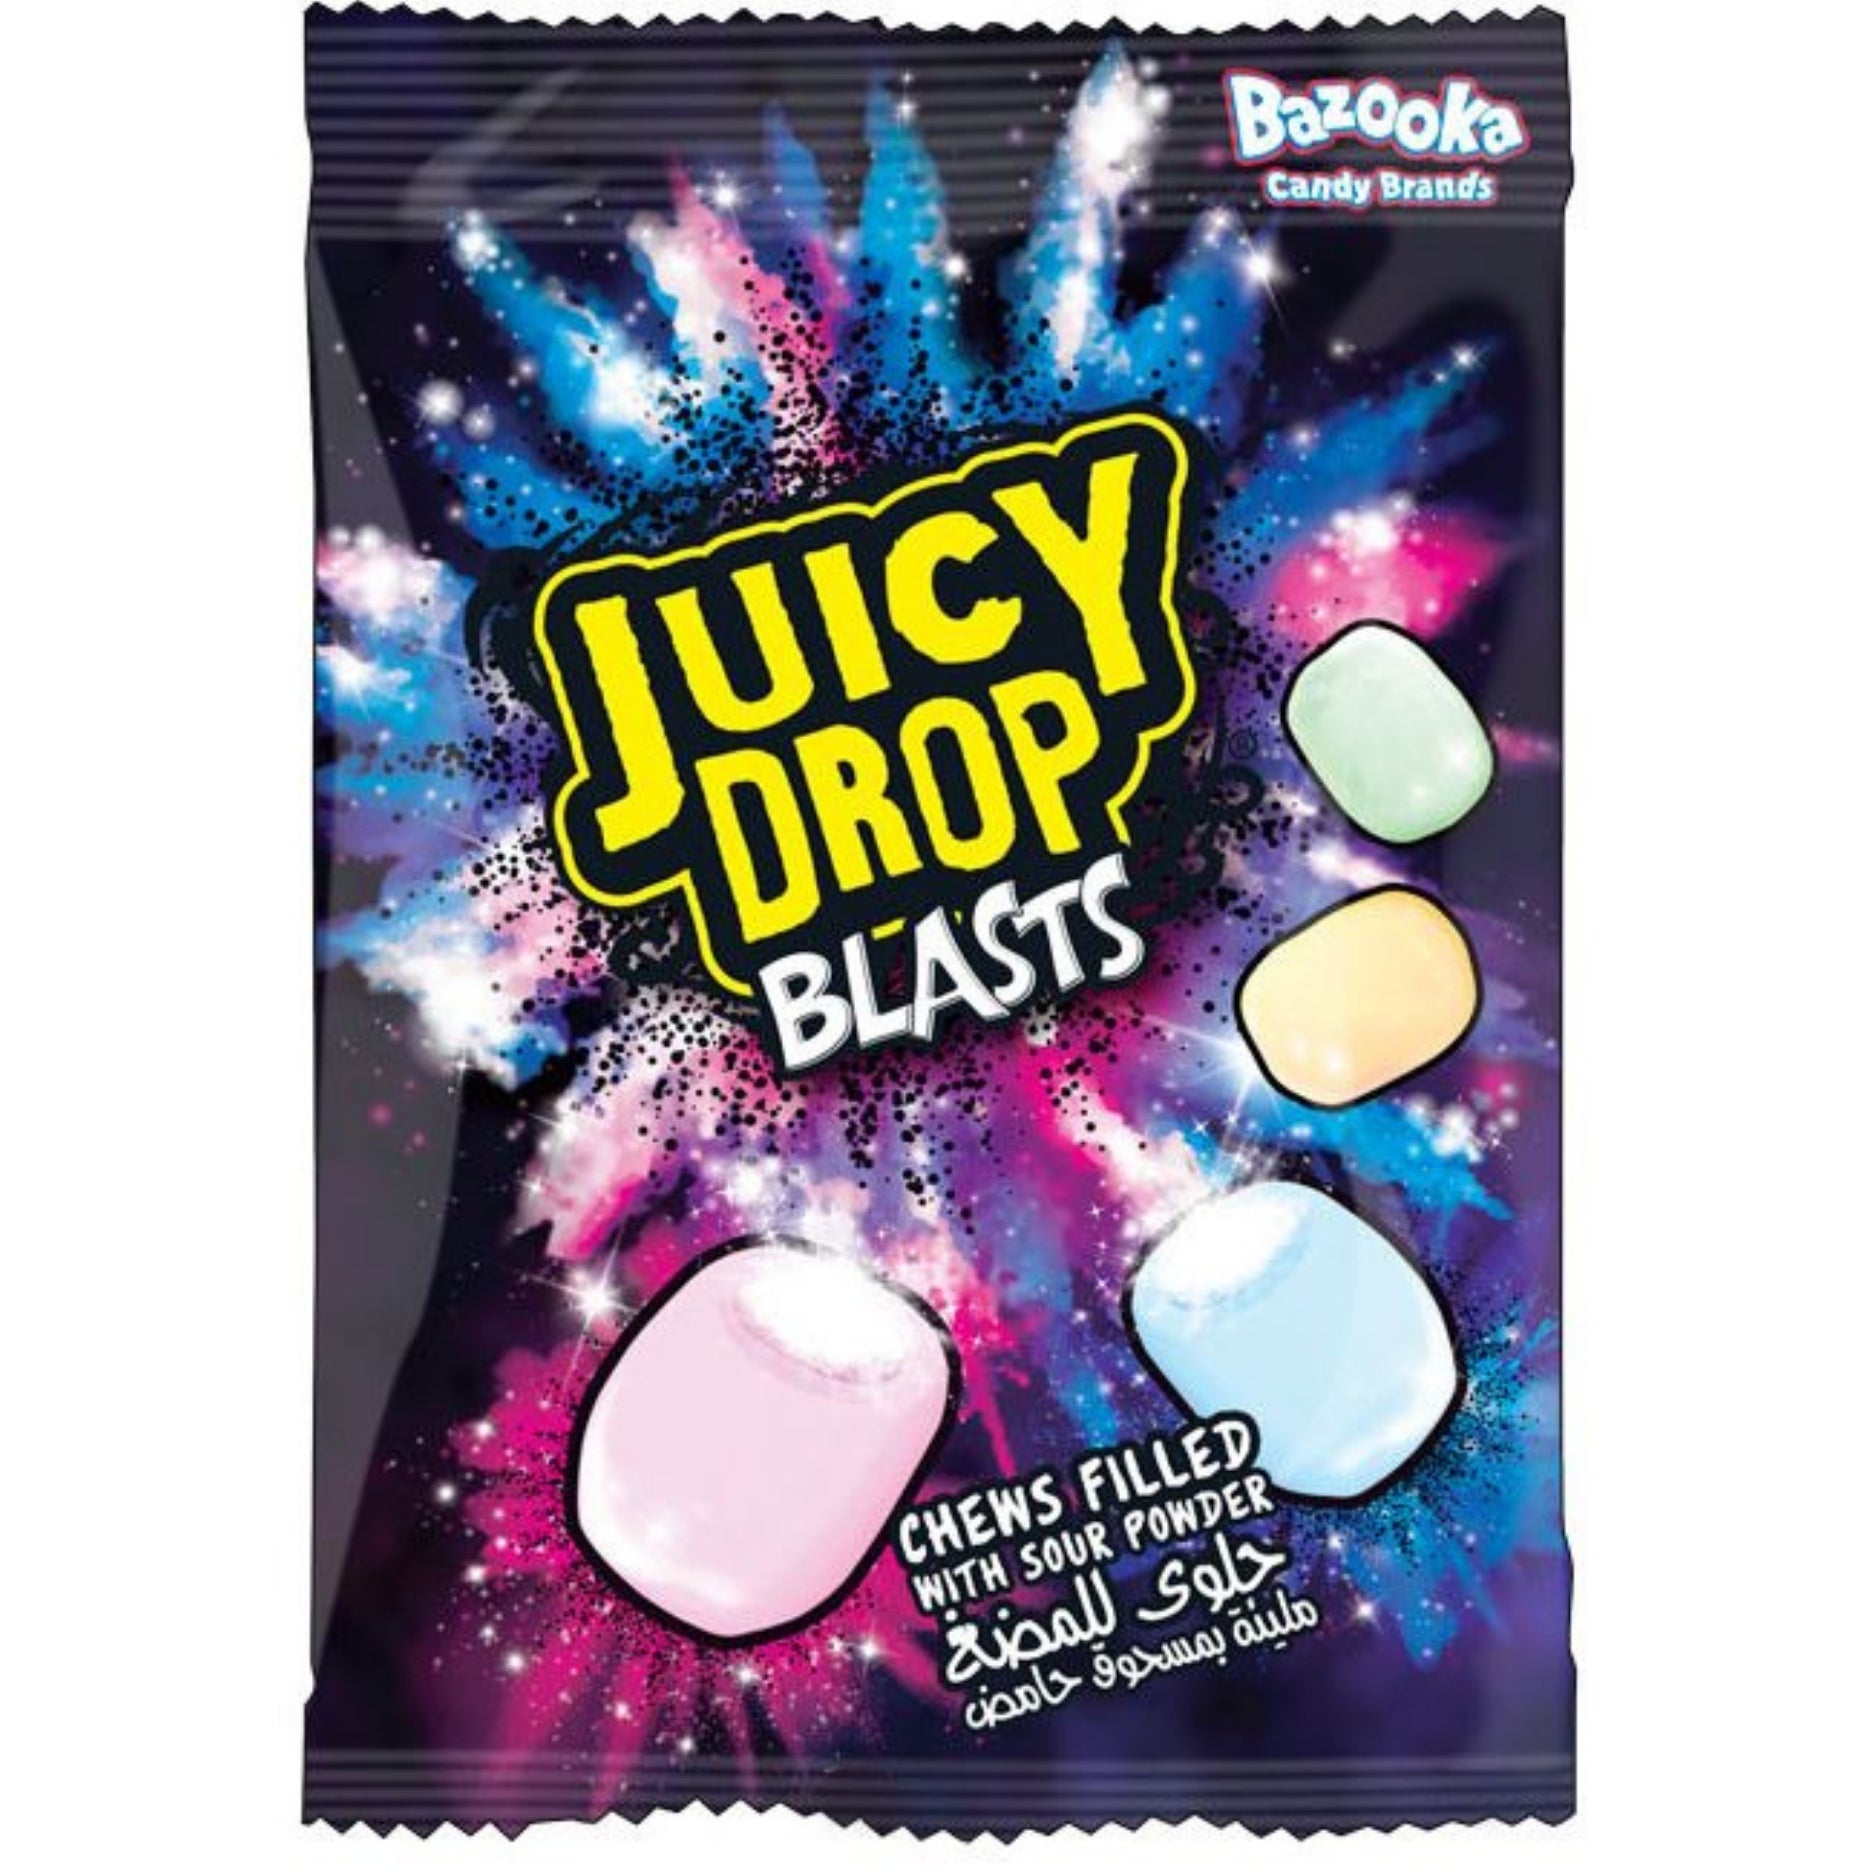 Juicy Drop Blasts from the UK